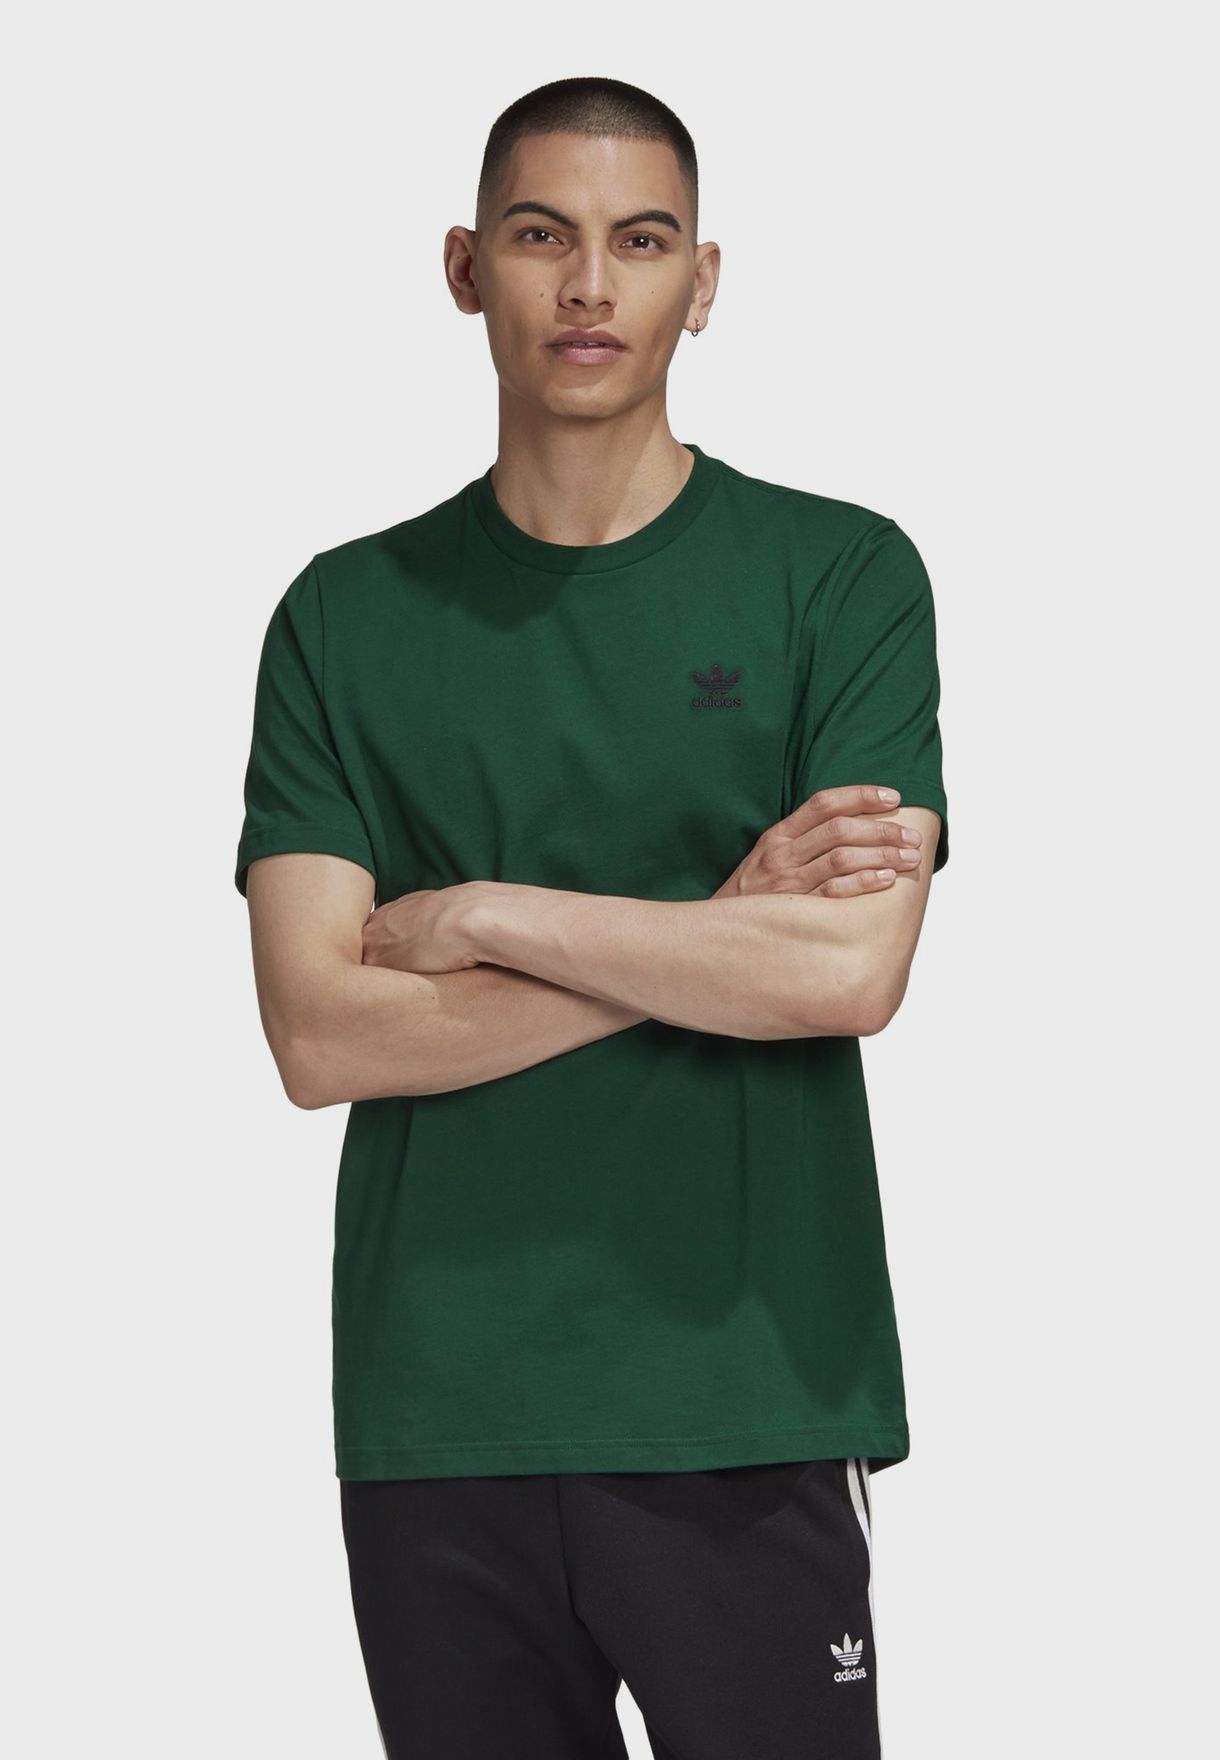 adidas originals green tshirt